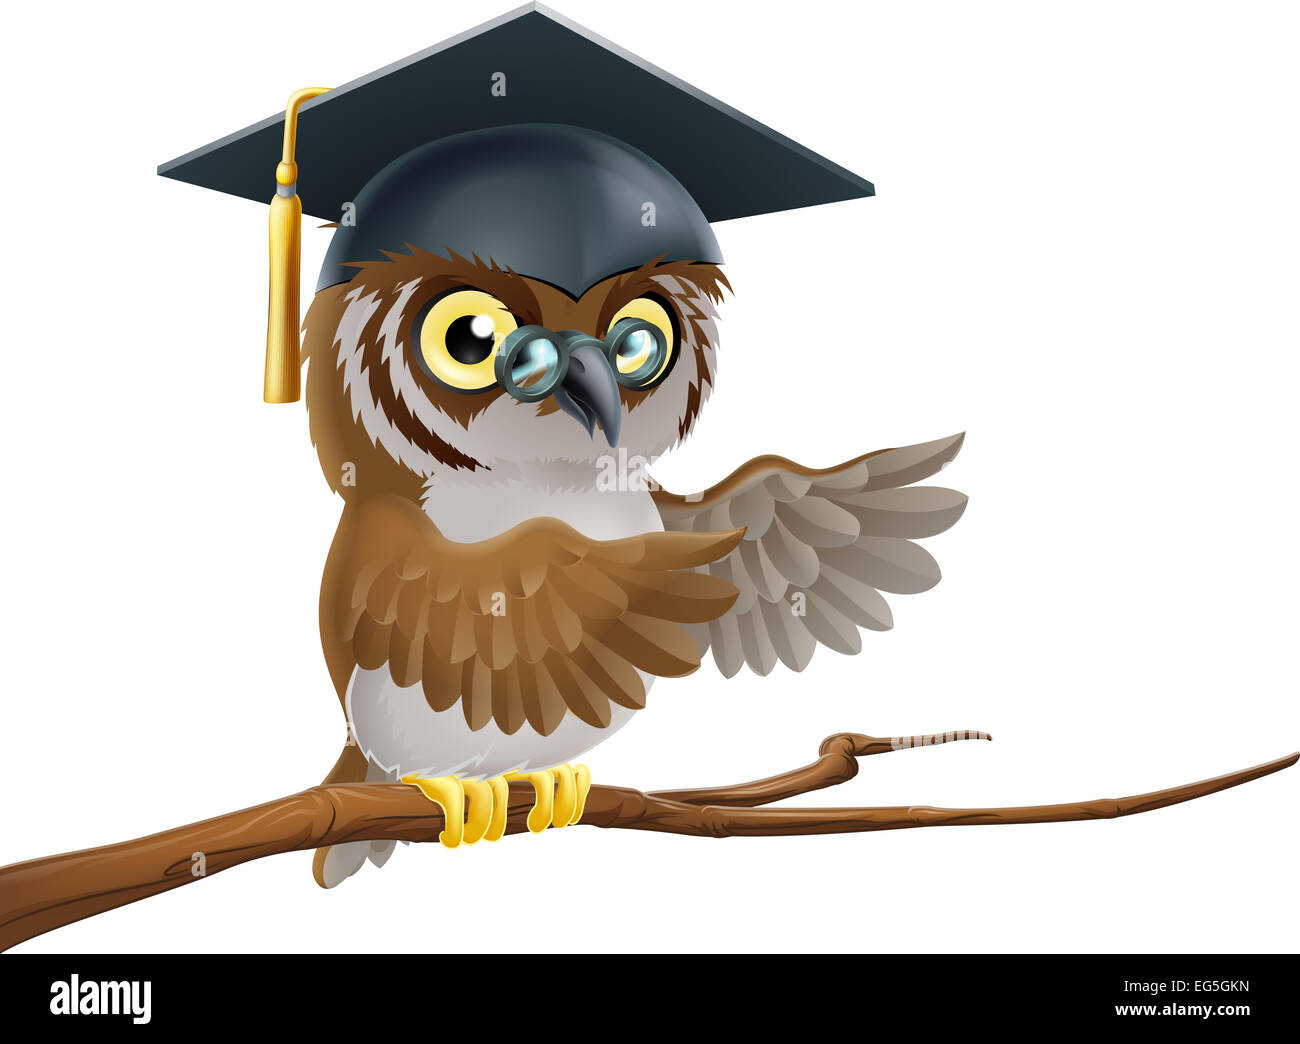 An illustration of a graduate or teacher owl in a mortar board graduate hat Stock Photo